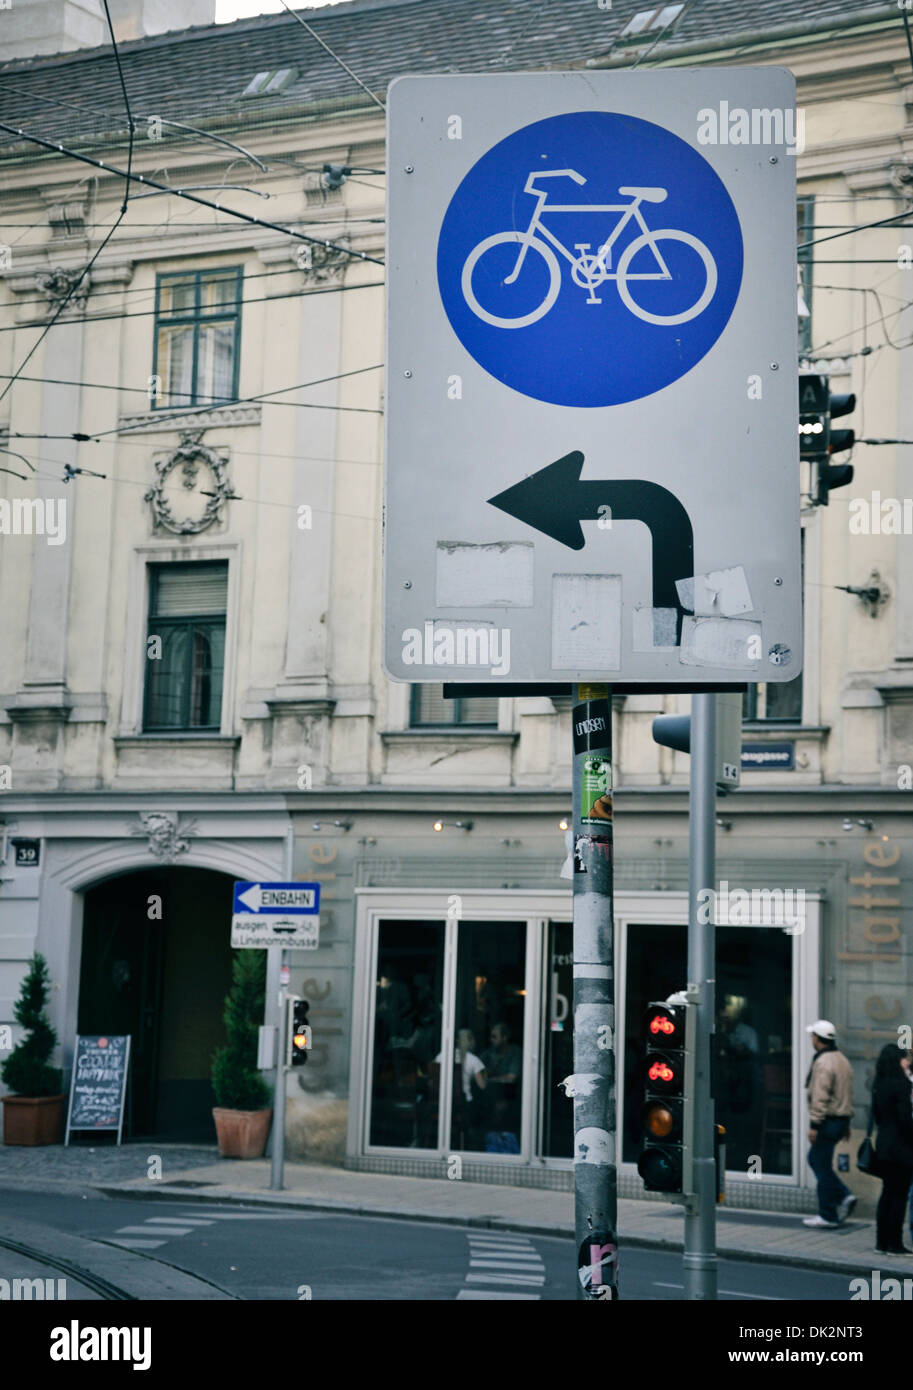 Vienna bicycle street sign Stock Photo